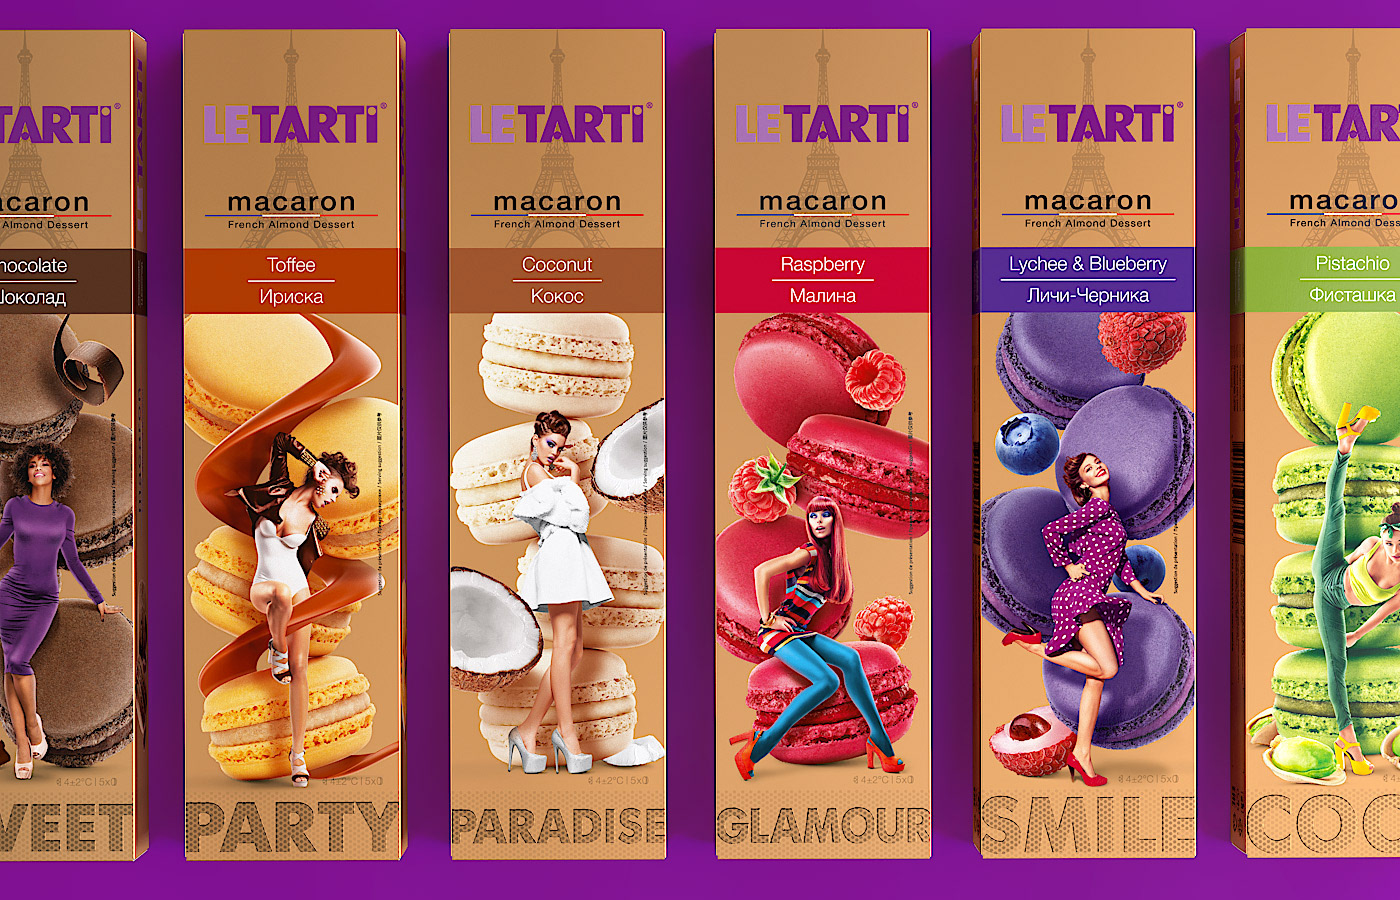 Le Tarti Ле Тарти упаковка Packaging macaron macaroon Макаруны макаронс дизайн упаковки ЗАКАЗАТЬ ДИЗАЙН УПАКОВКИ